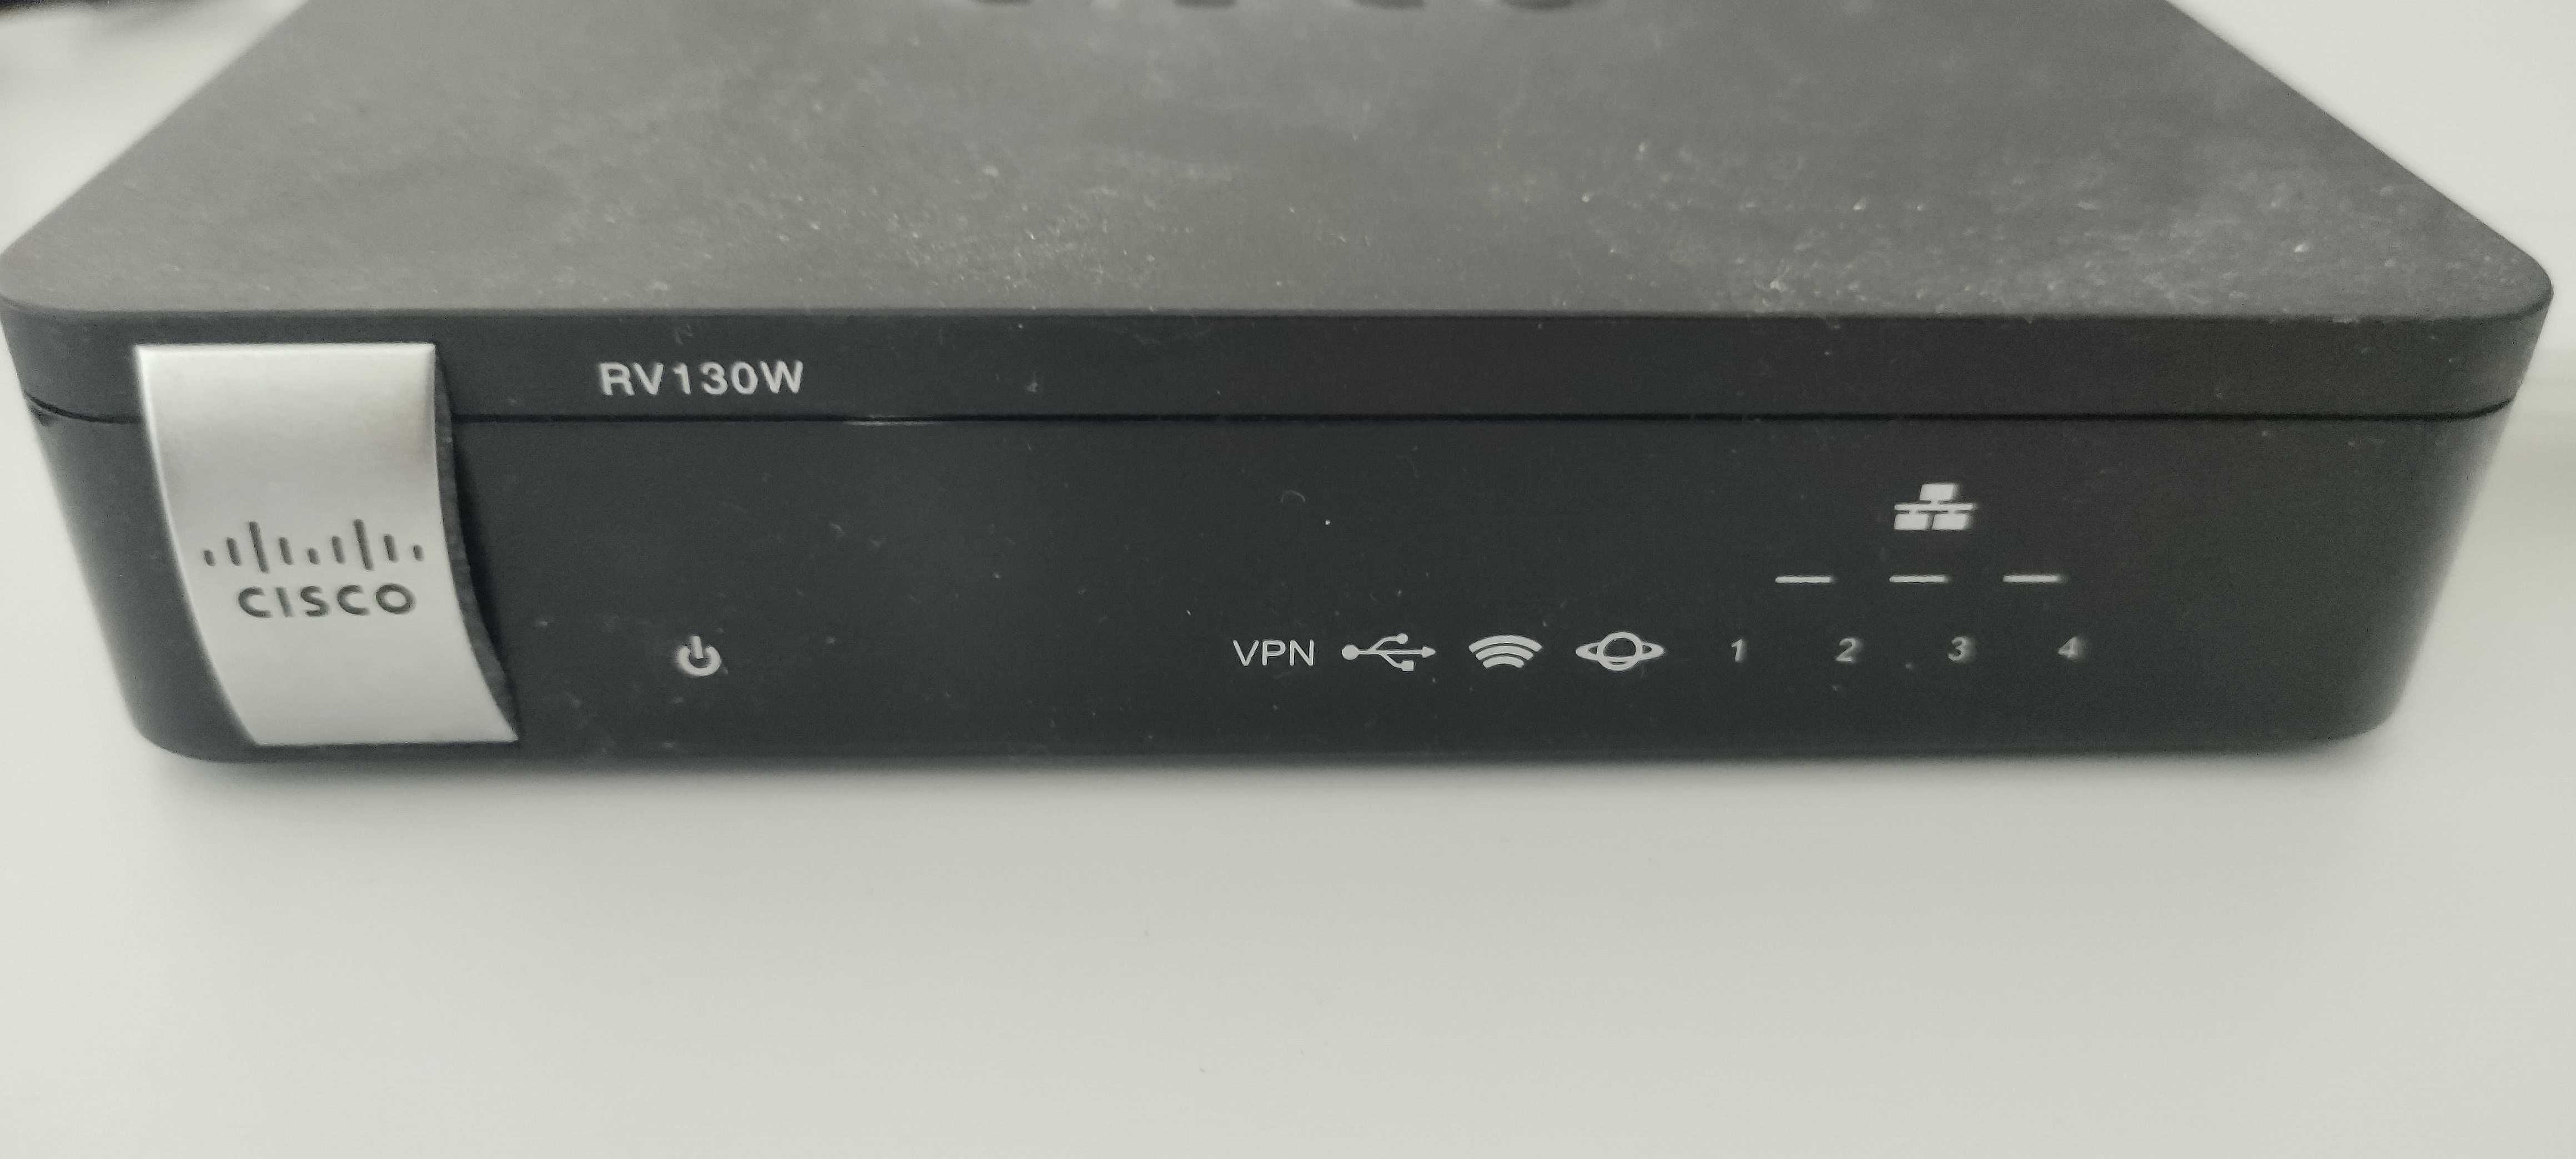 Pachet router Wireless Cisco RV130W si modem USB Huawei E1550